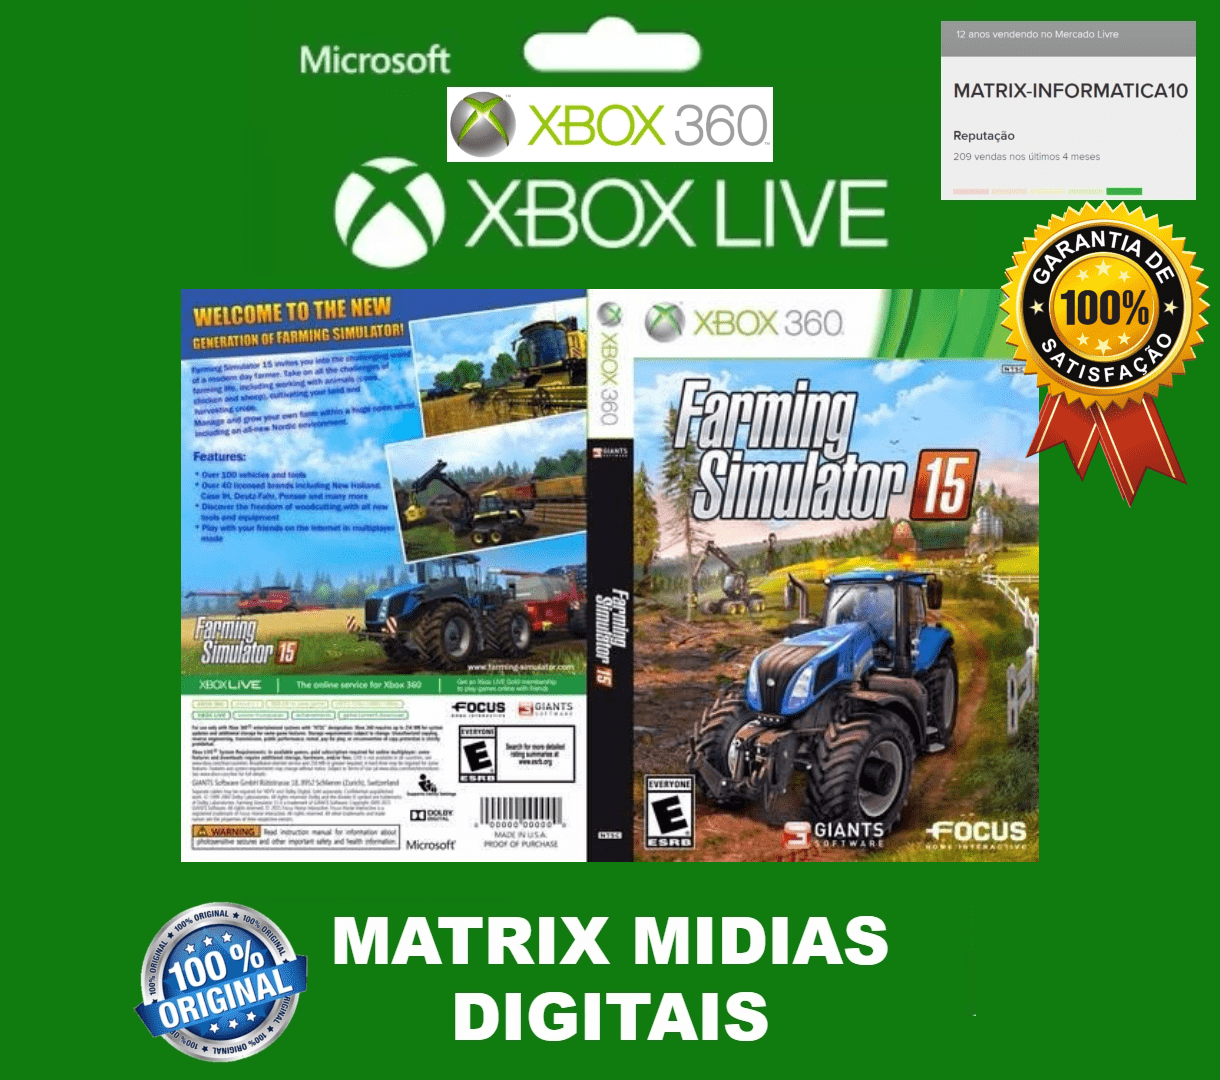 Jogos Xbox 360 transferência de Licença Mídia Digital - FARMING